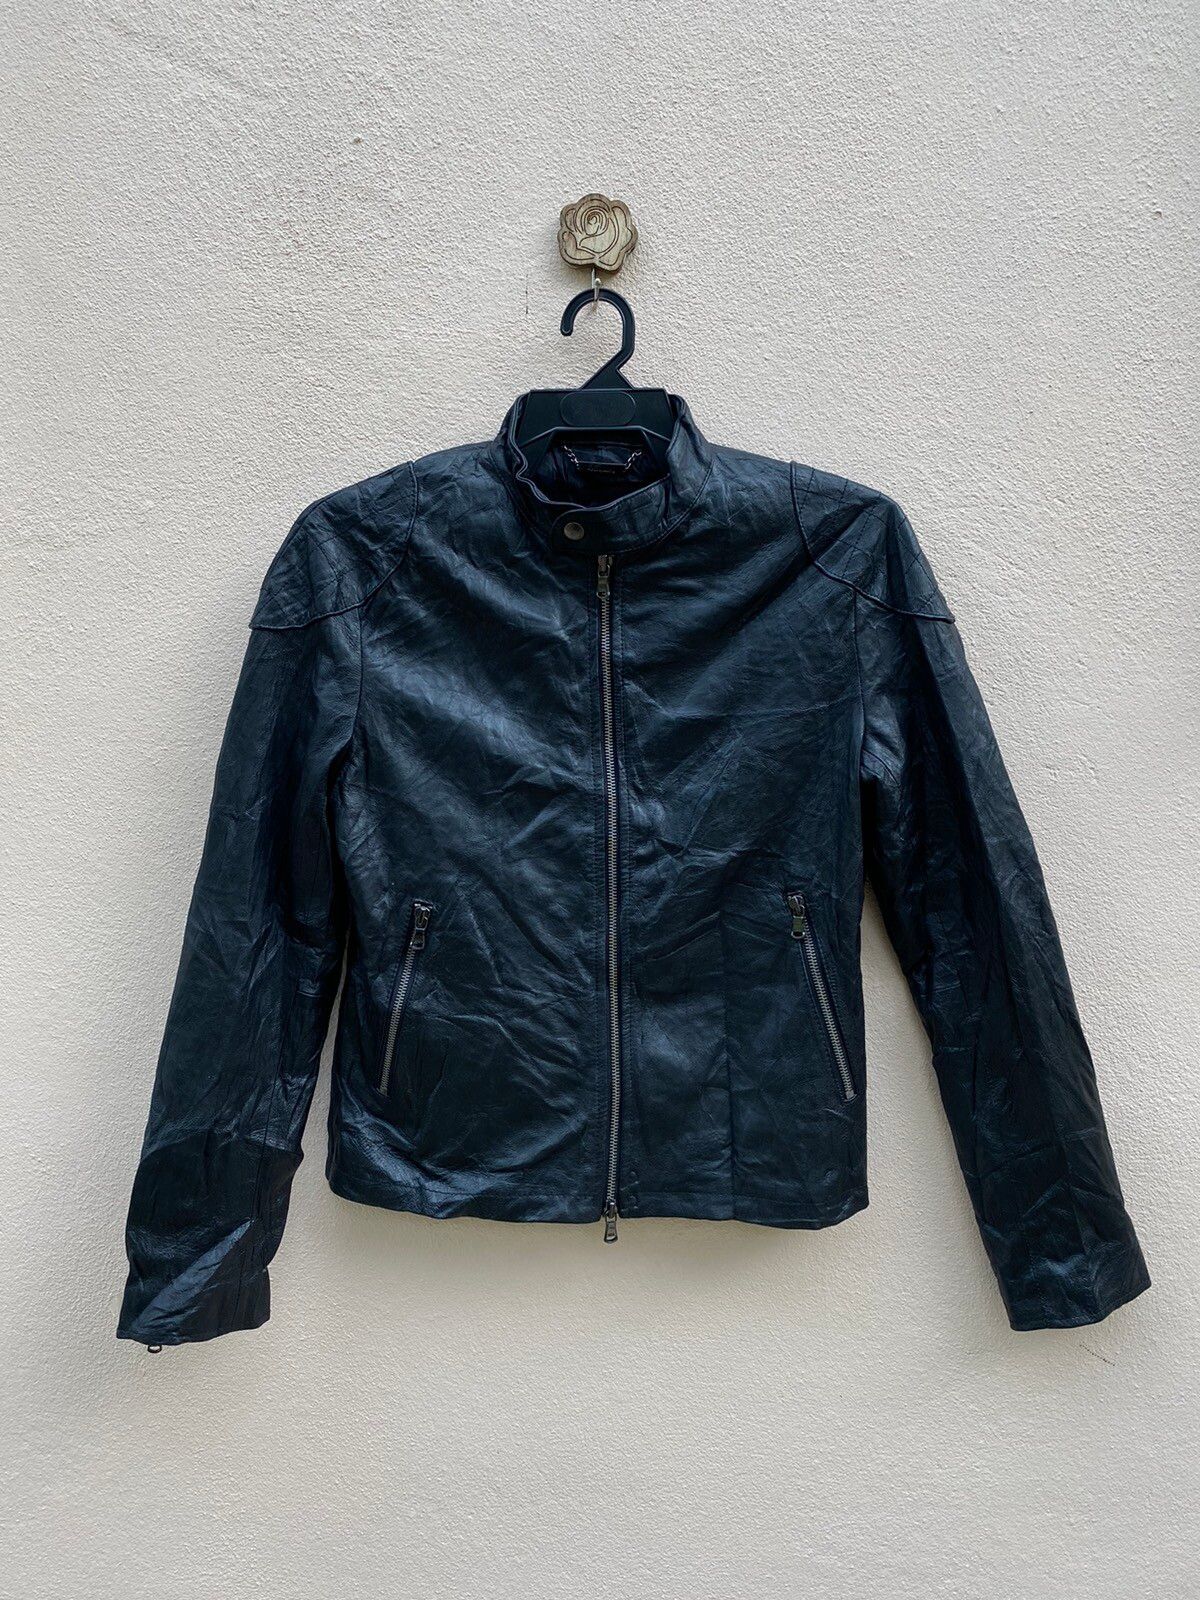 Men's Vanquish Leather Jackets | Grailed